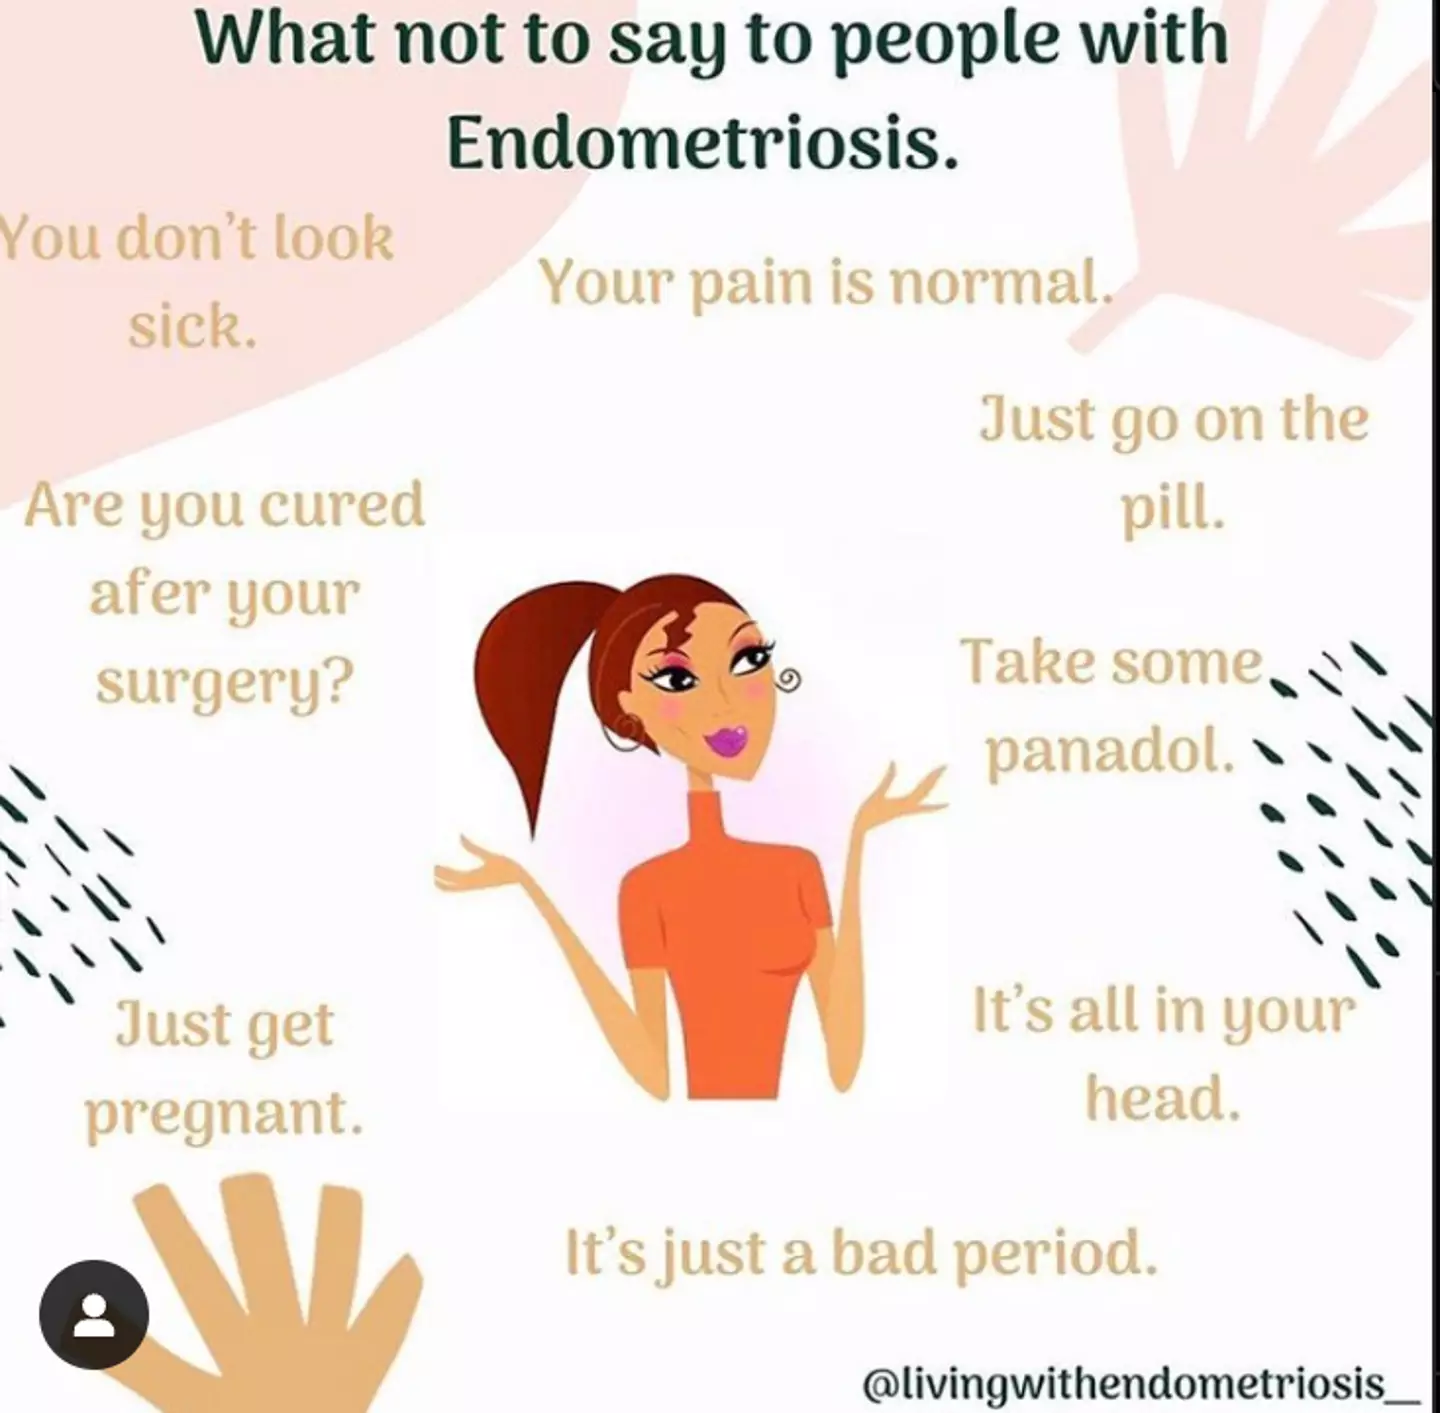 Endometriosis affects 1 in 10 people.